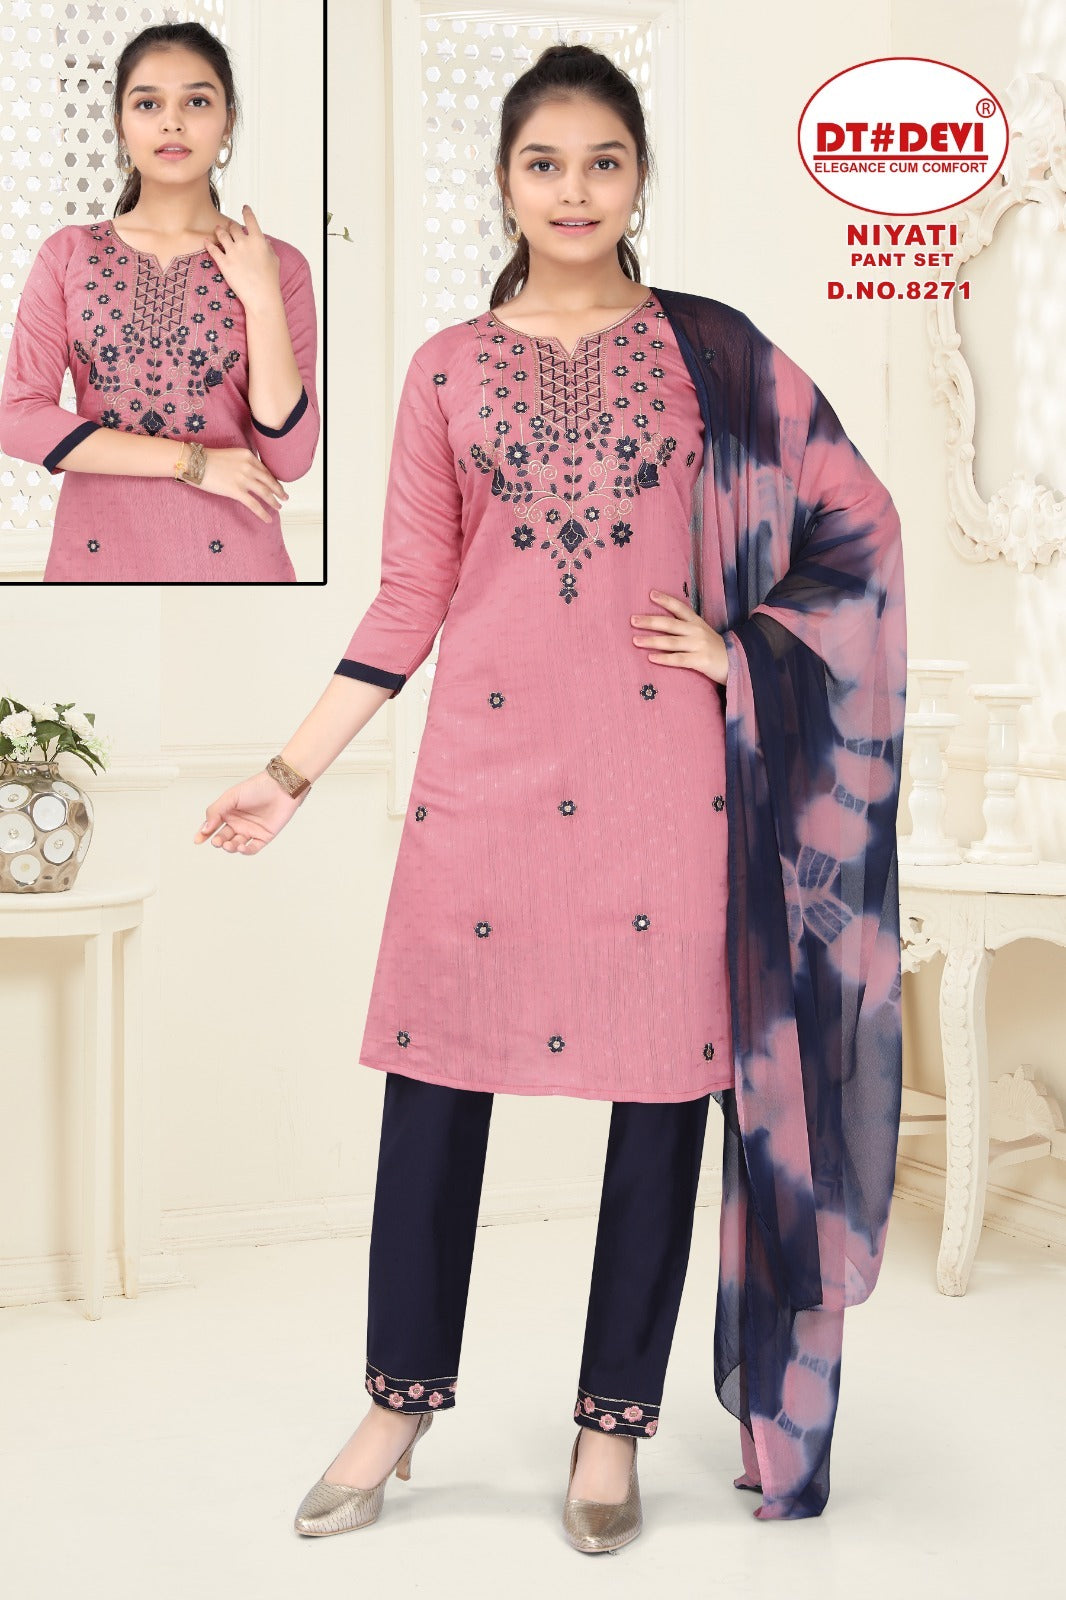 Niyati-8271 Dt Devi Silk Readymade Pant Style Suits